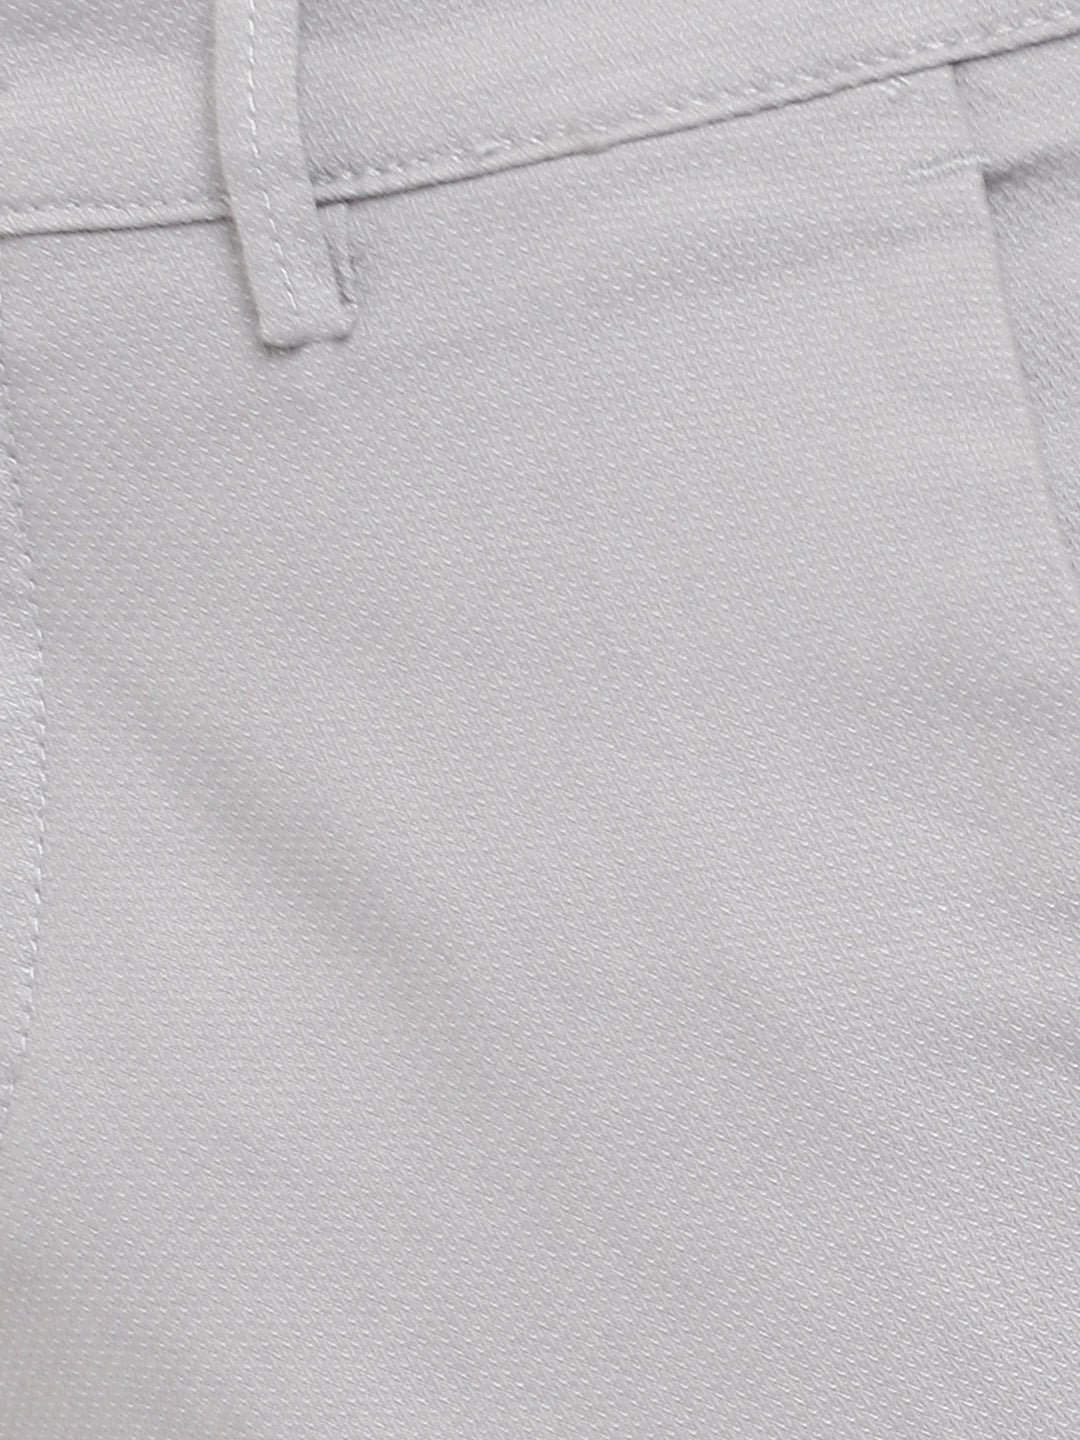 Grey Ultra Slim Self Design Trouser